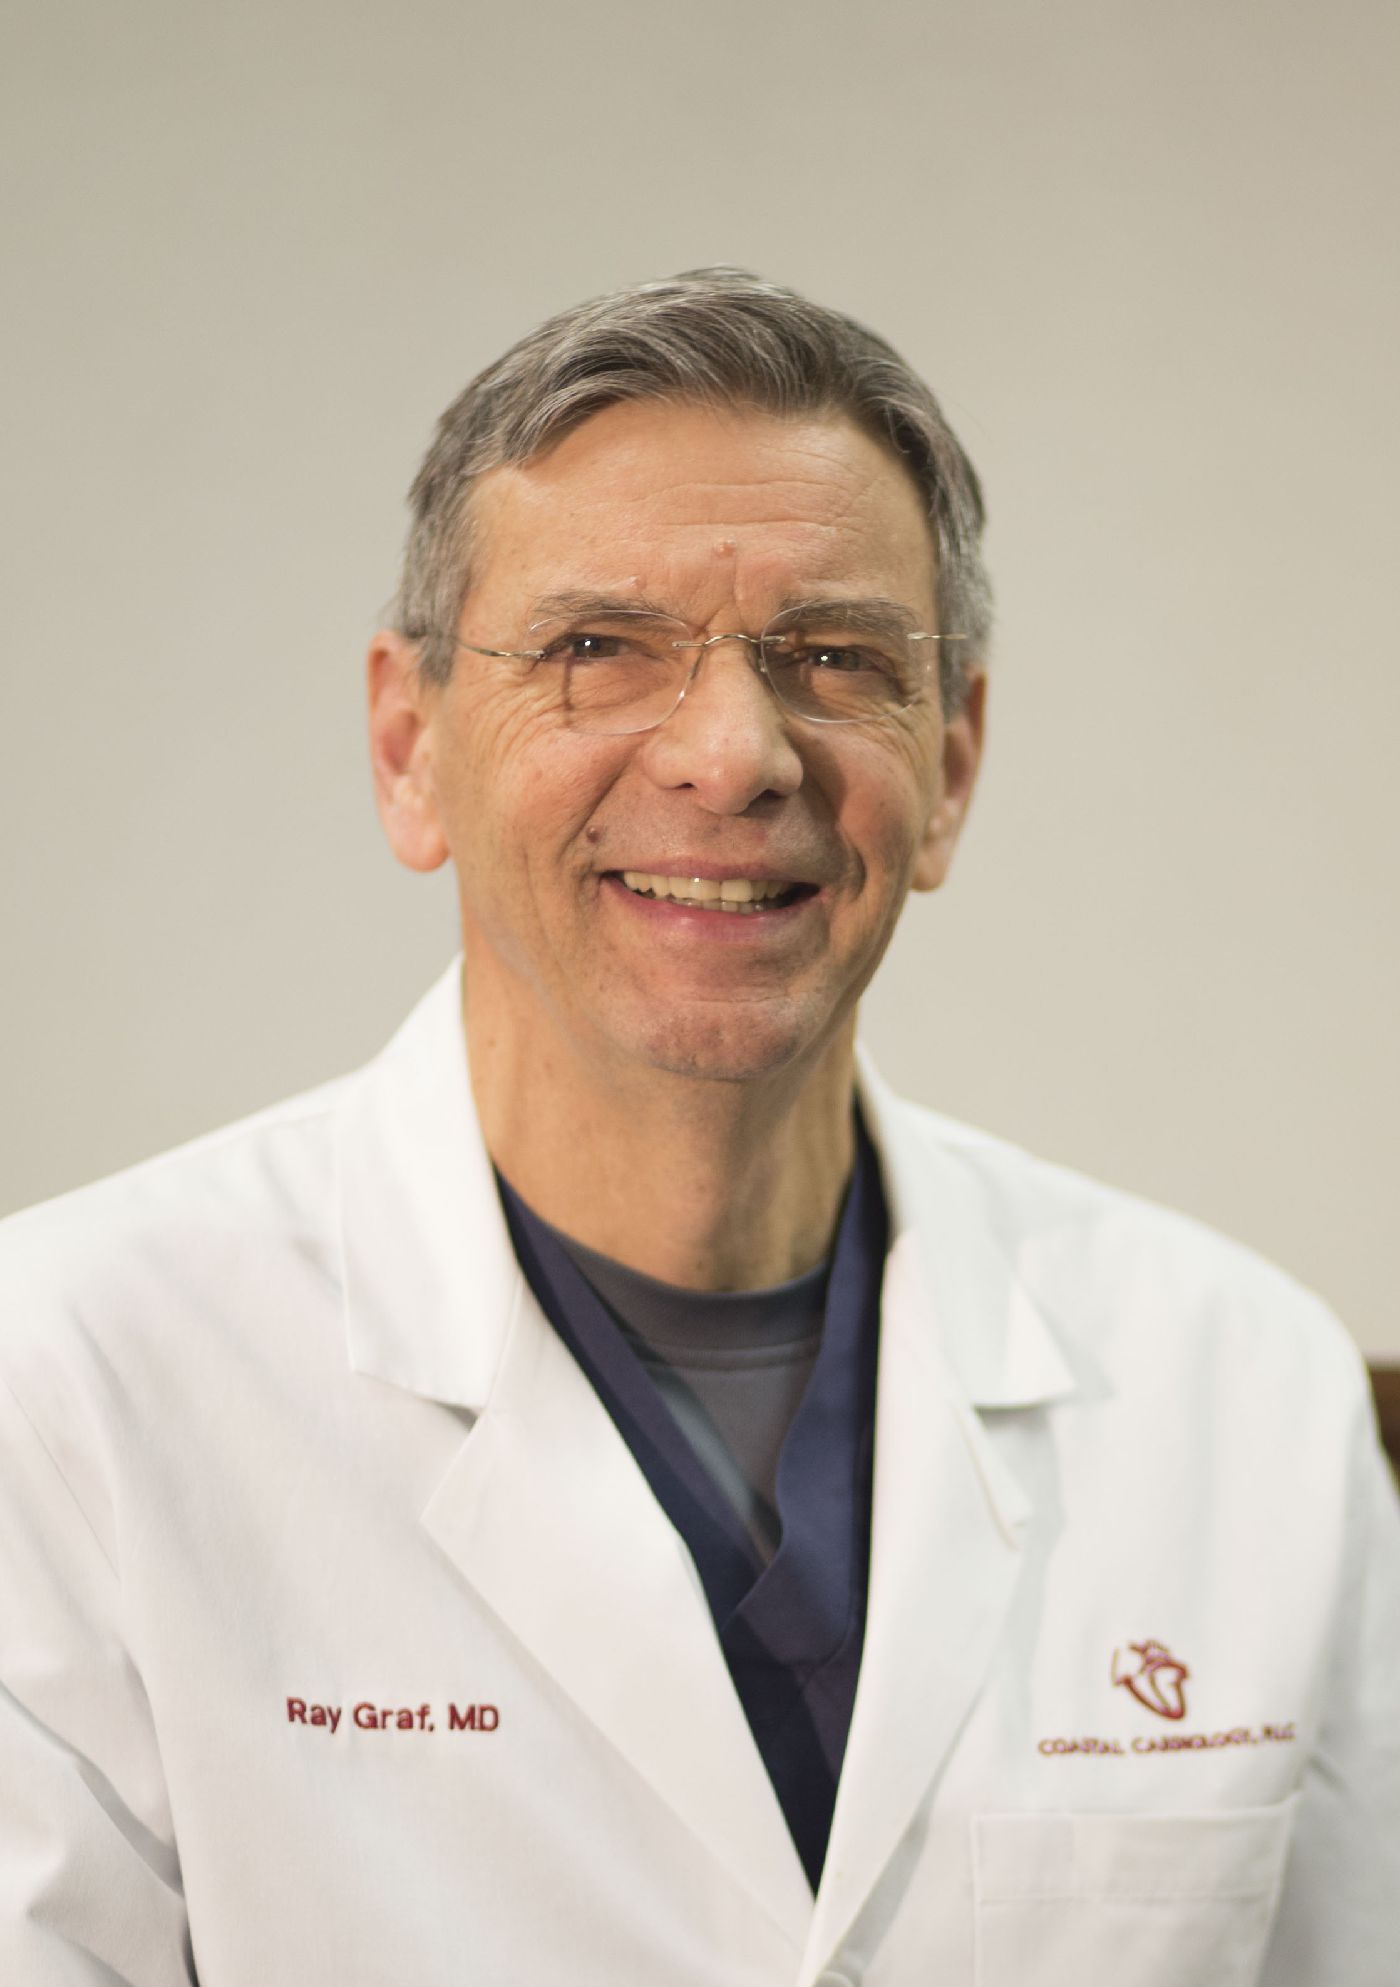 Dr. Graf - Cardiologist at Coastal Cardiology Association